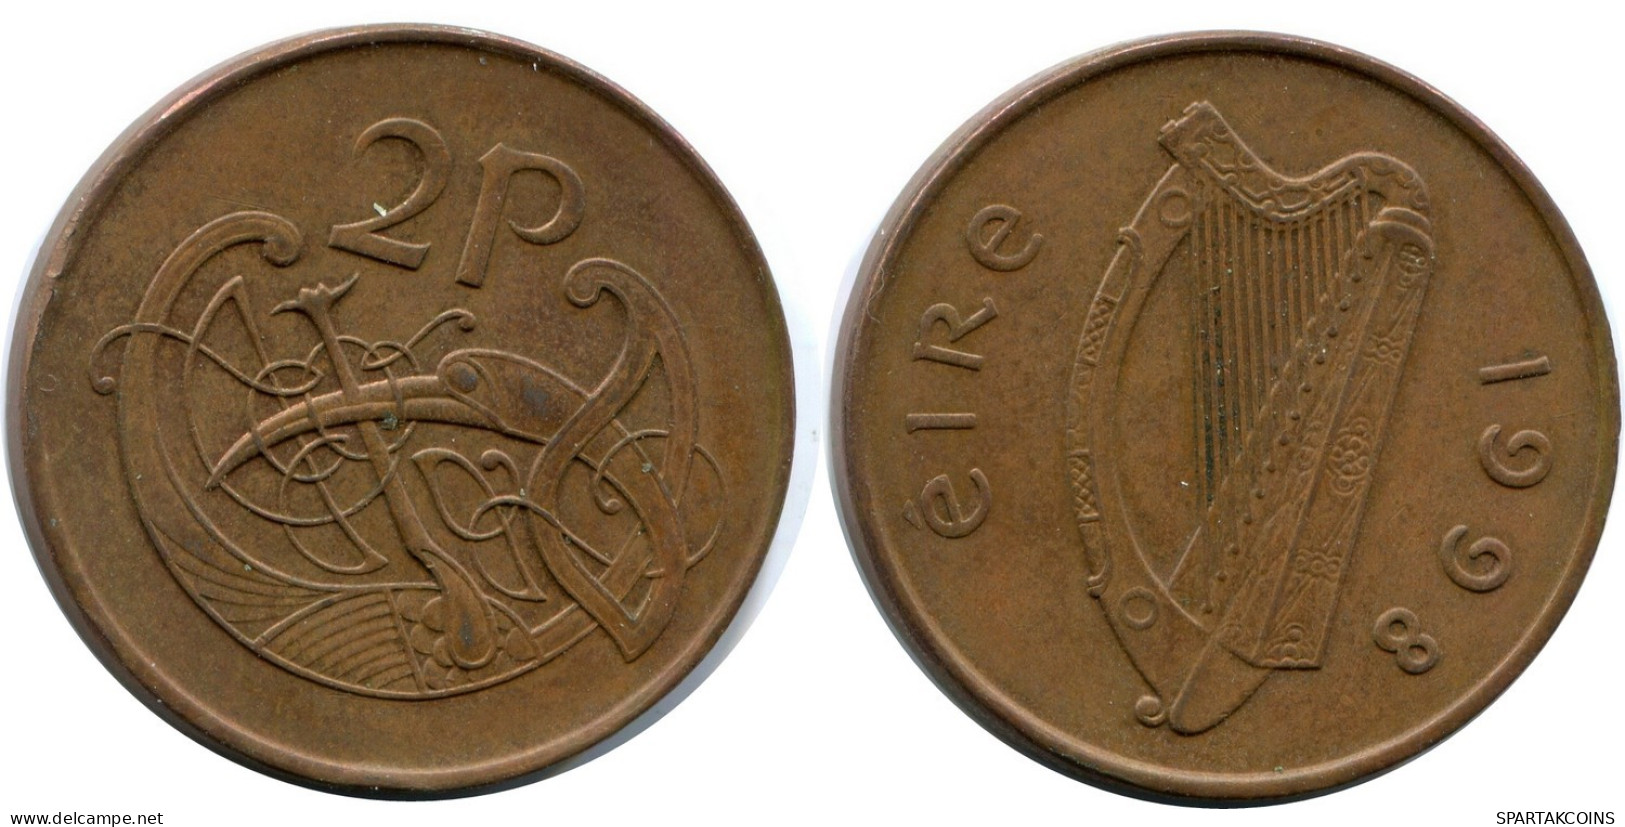 2 PENCE 1998 IRELAND Coin #AY678.U.A - Ireland